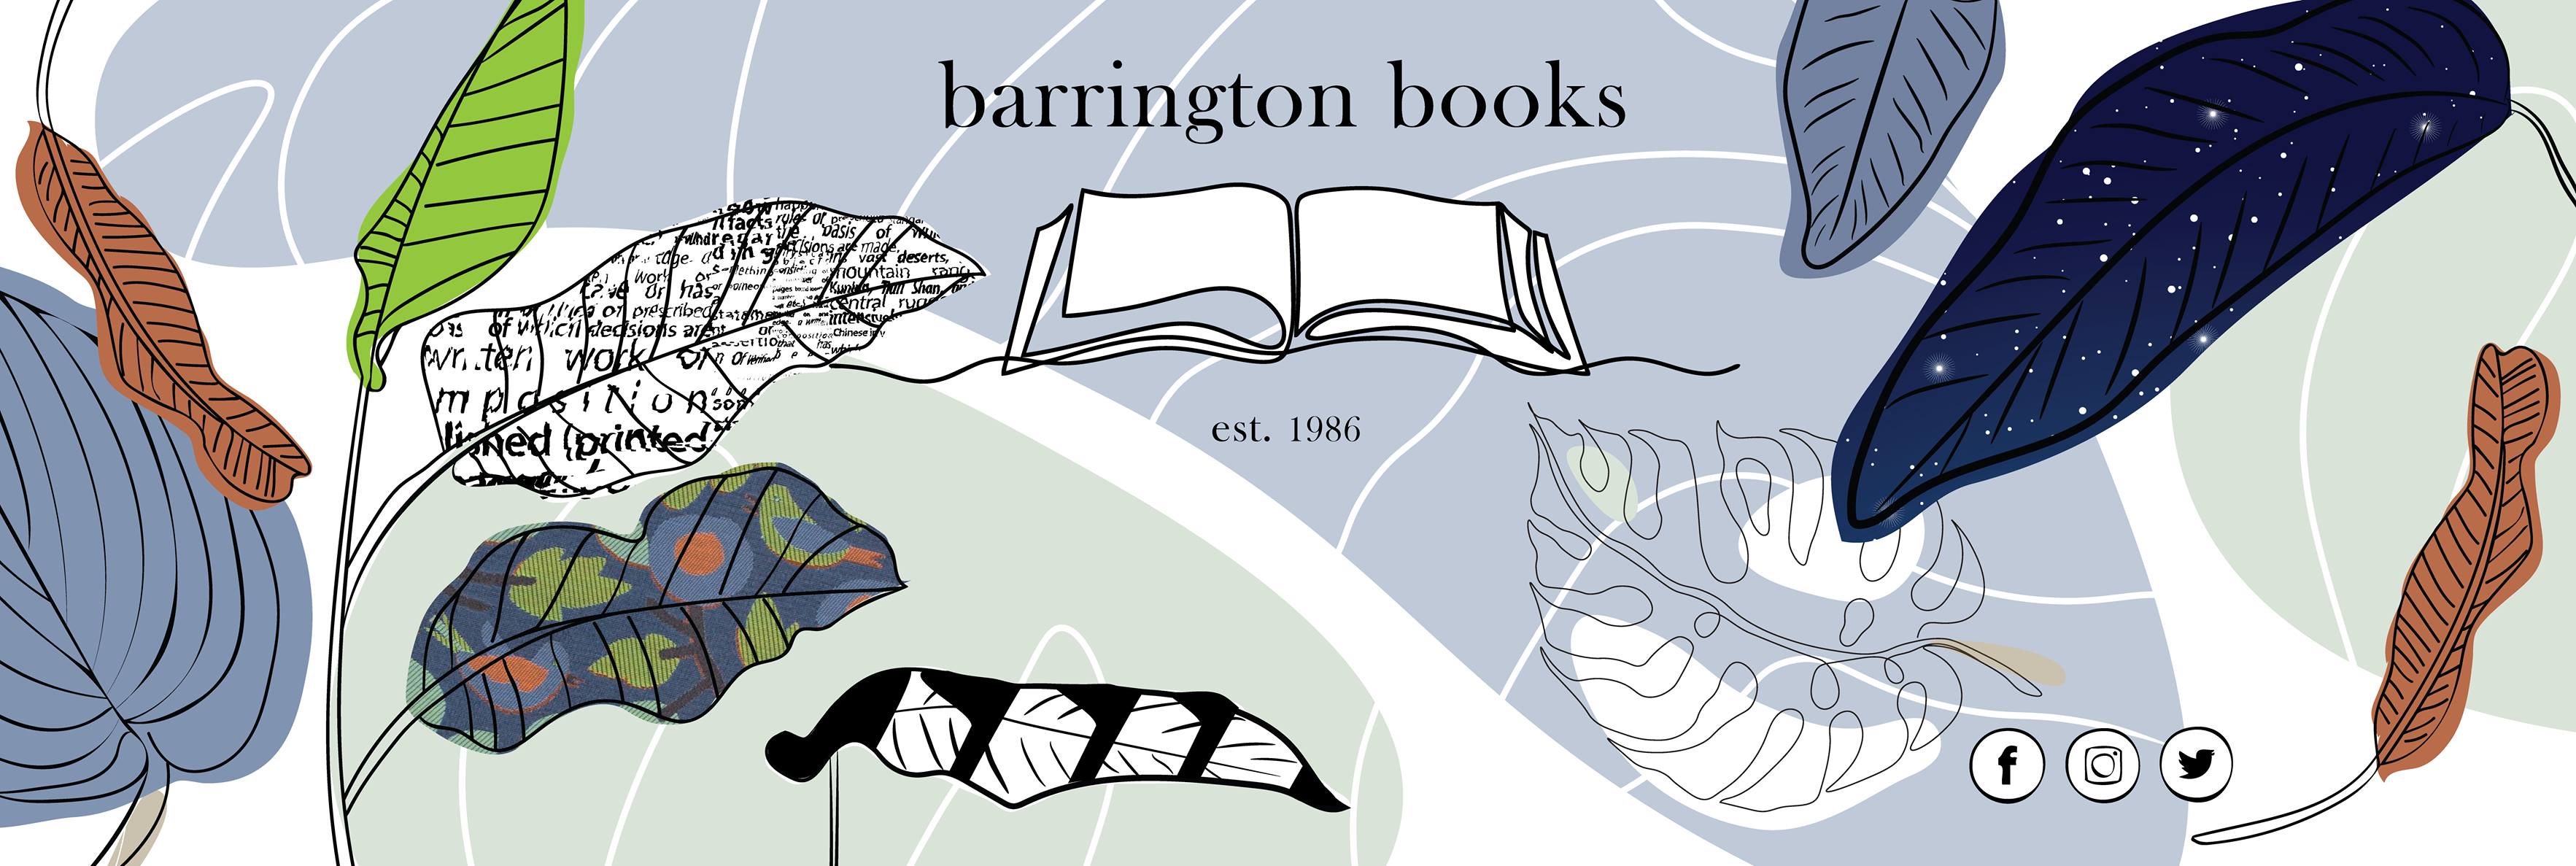 Barrington Books